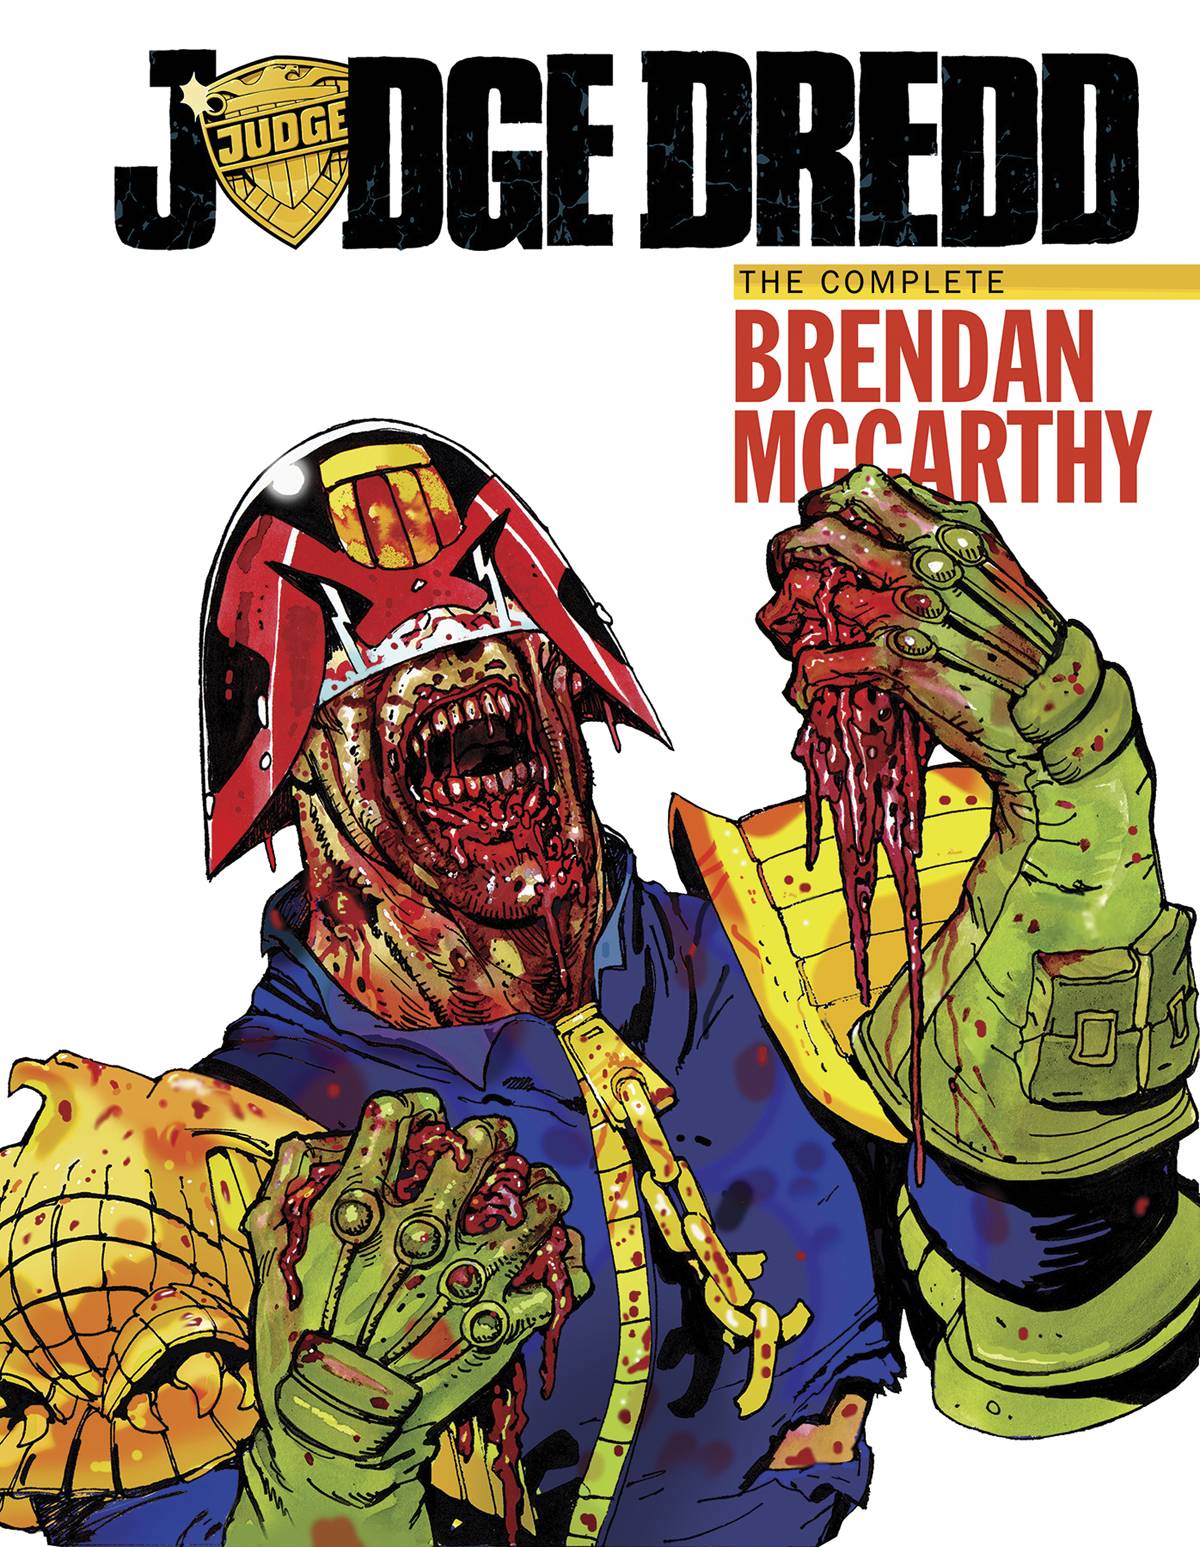 Judge Dredd Brendan Mccarthy Collection Hardcover